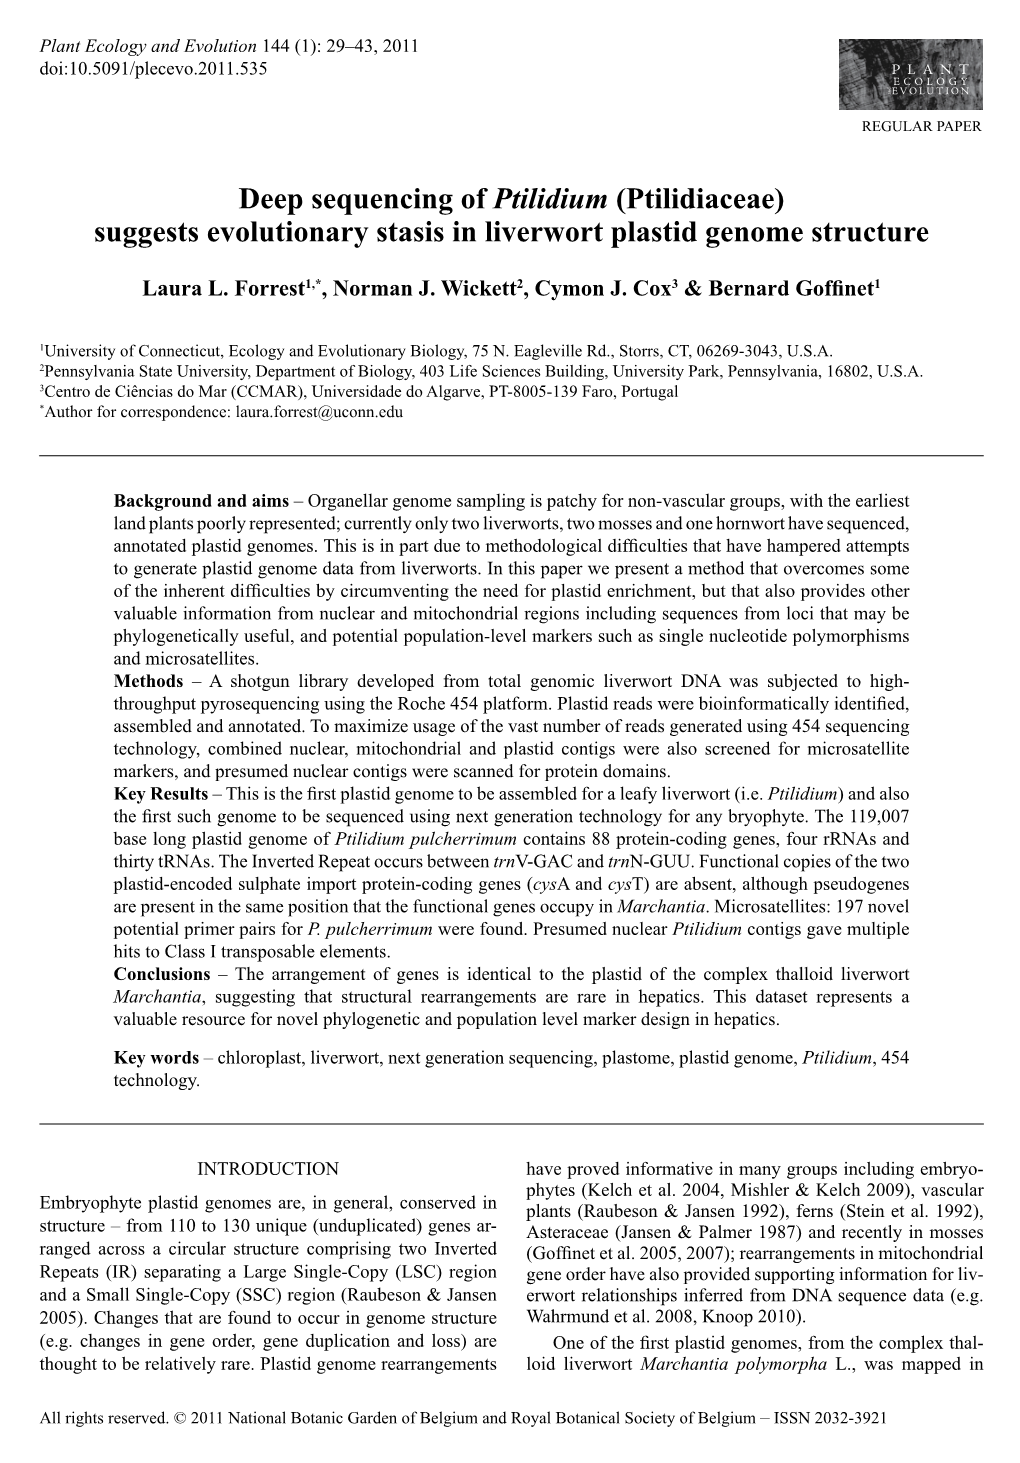 Suggests Evolutionary Stasis in Liverwort Plastid Genome Structure